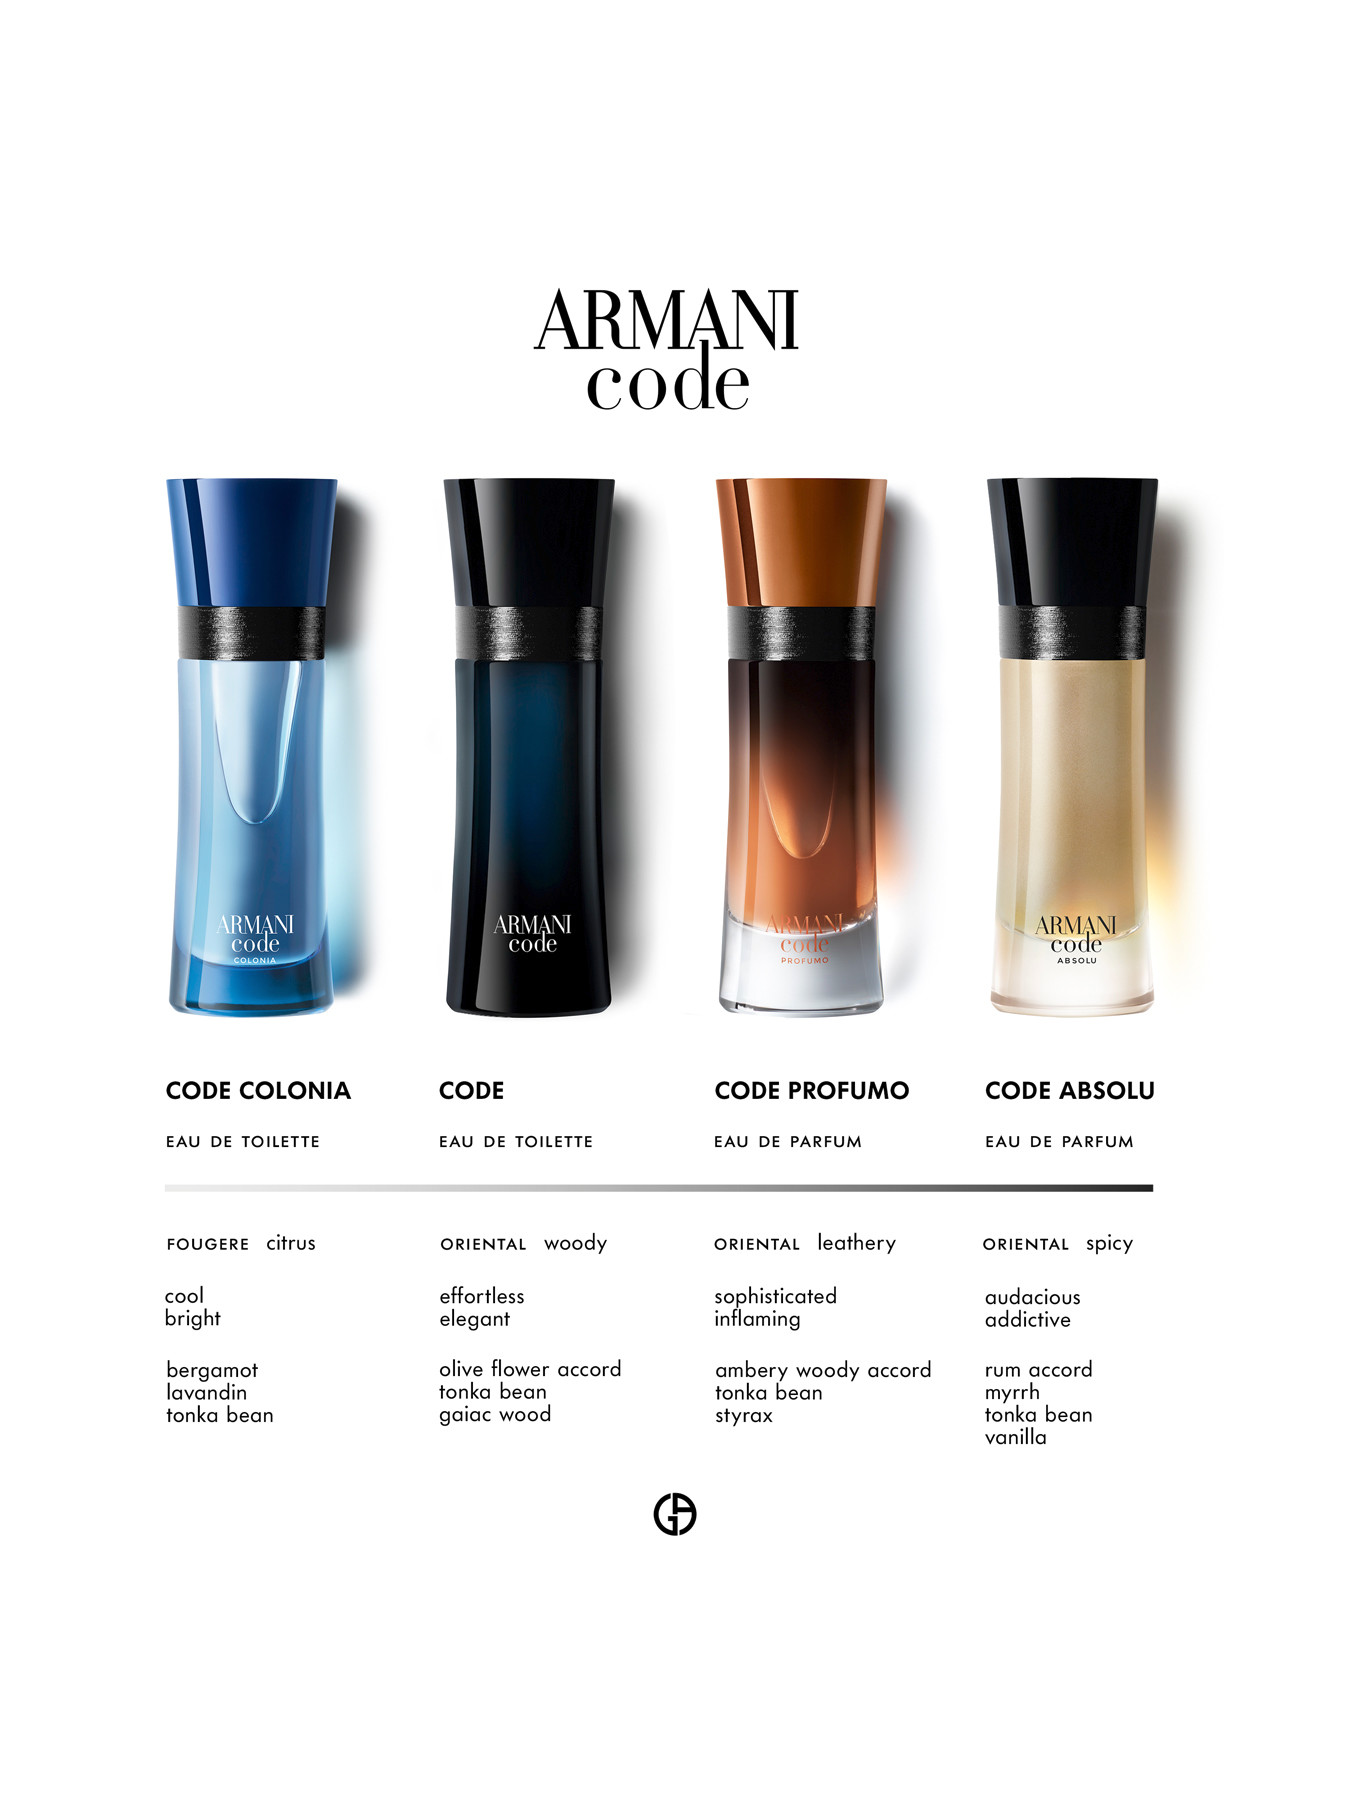 Giorgio Armani Armani Code Absolu Eau de Parfum 60 ml | Fenwick